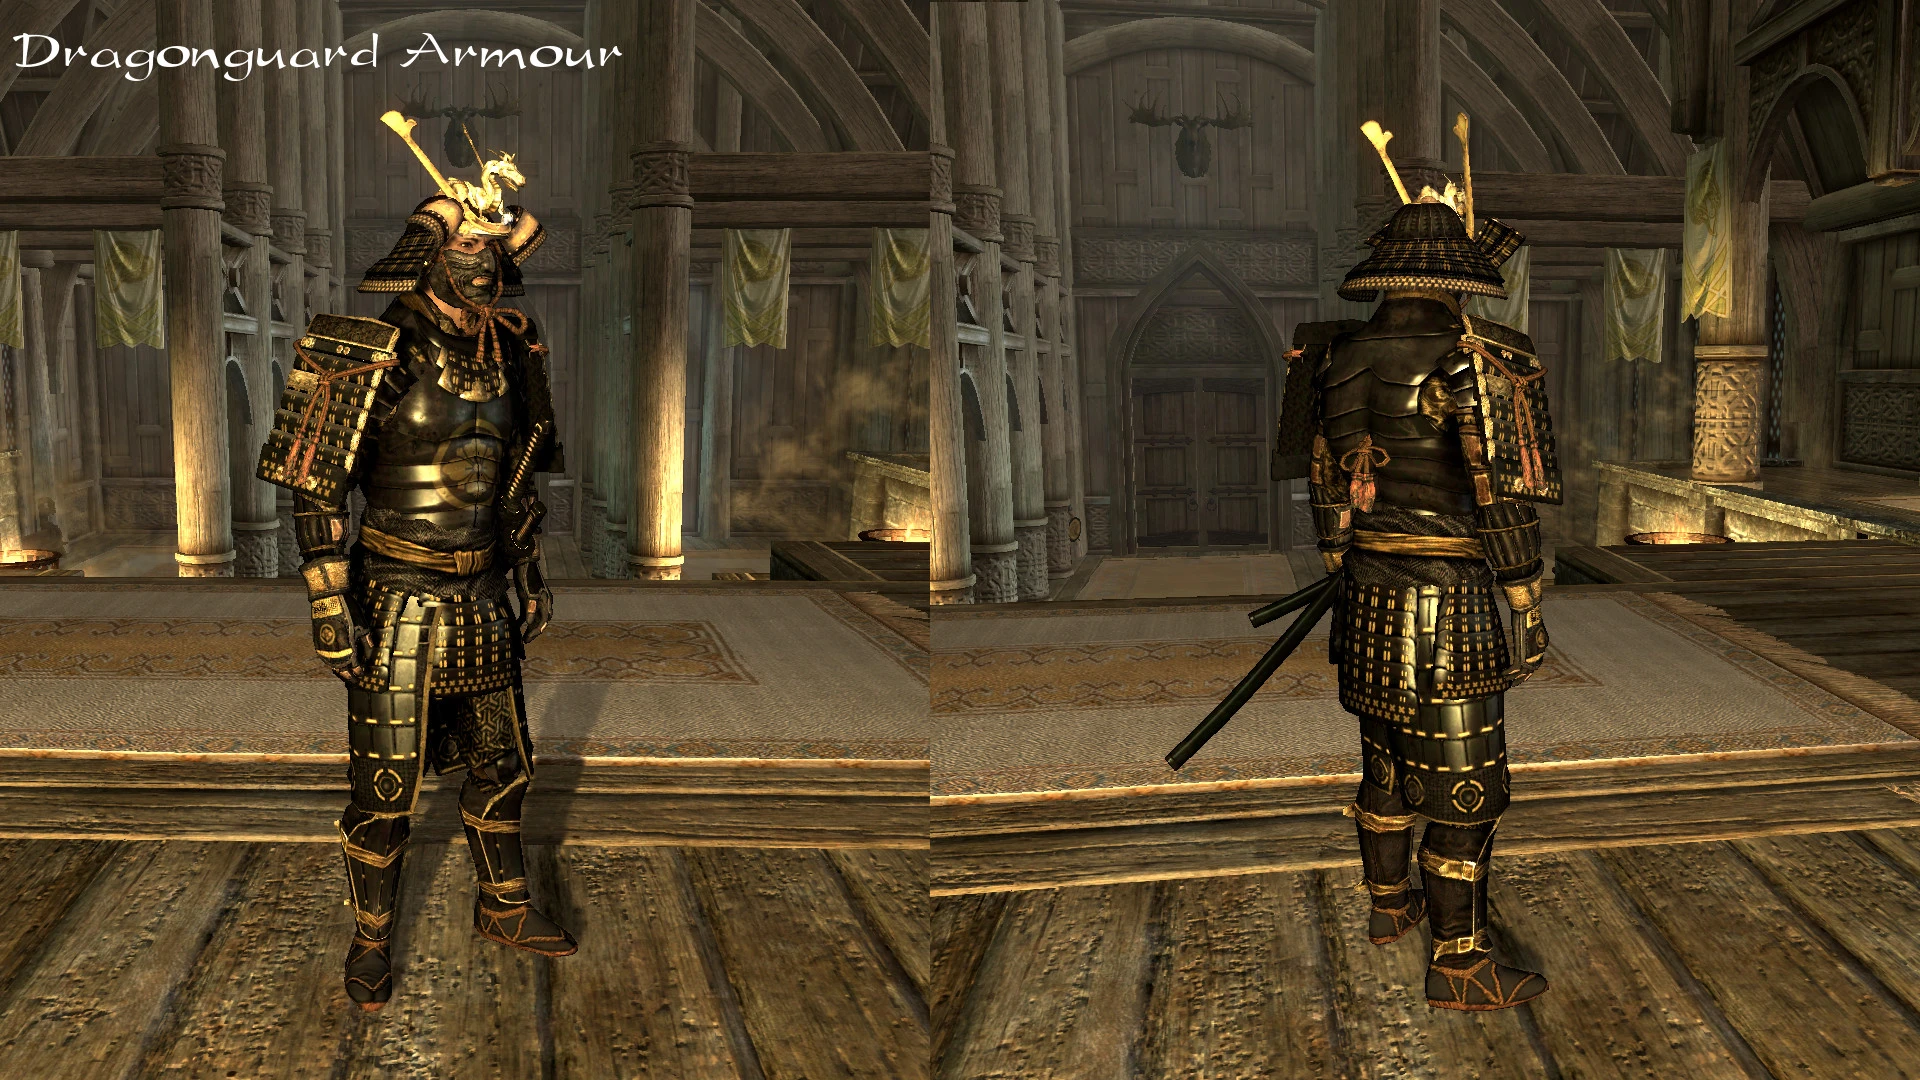 blades samurai armor and kimonos v2 at skyrim special edition nexus.